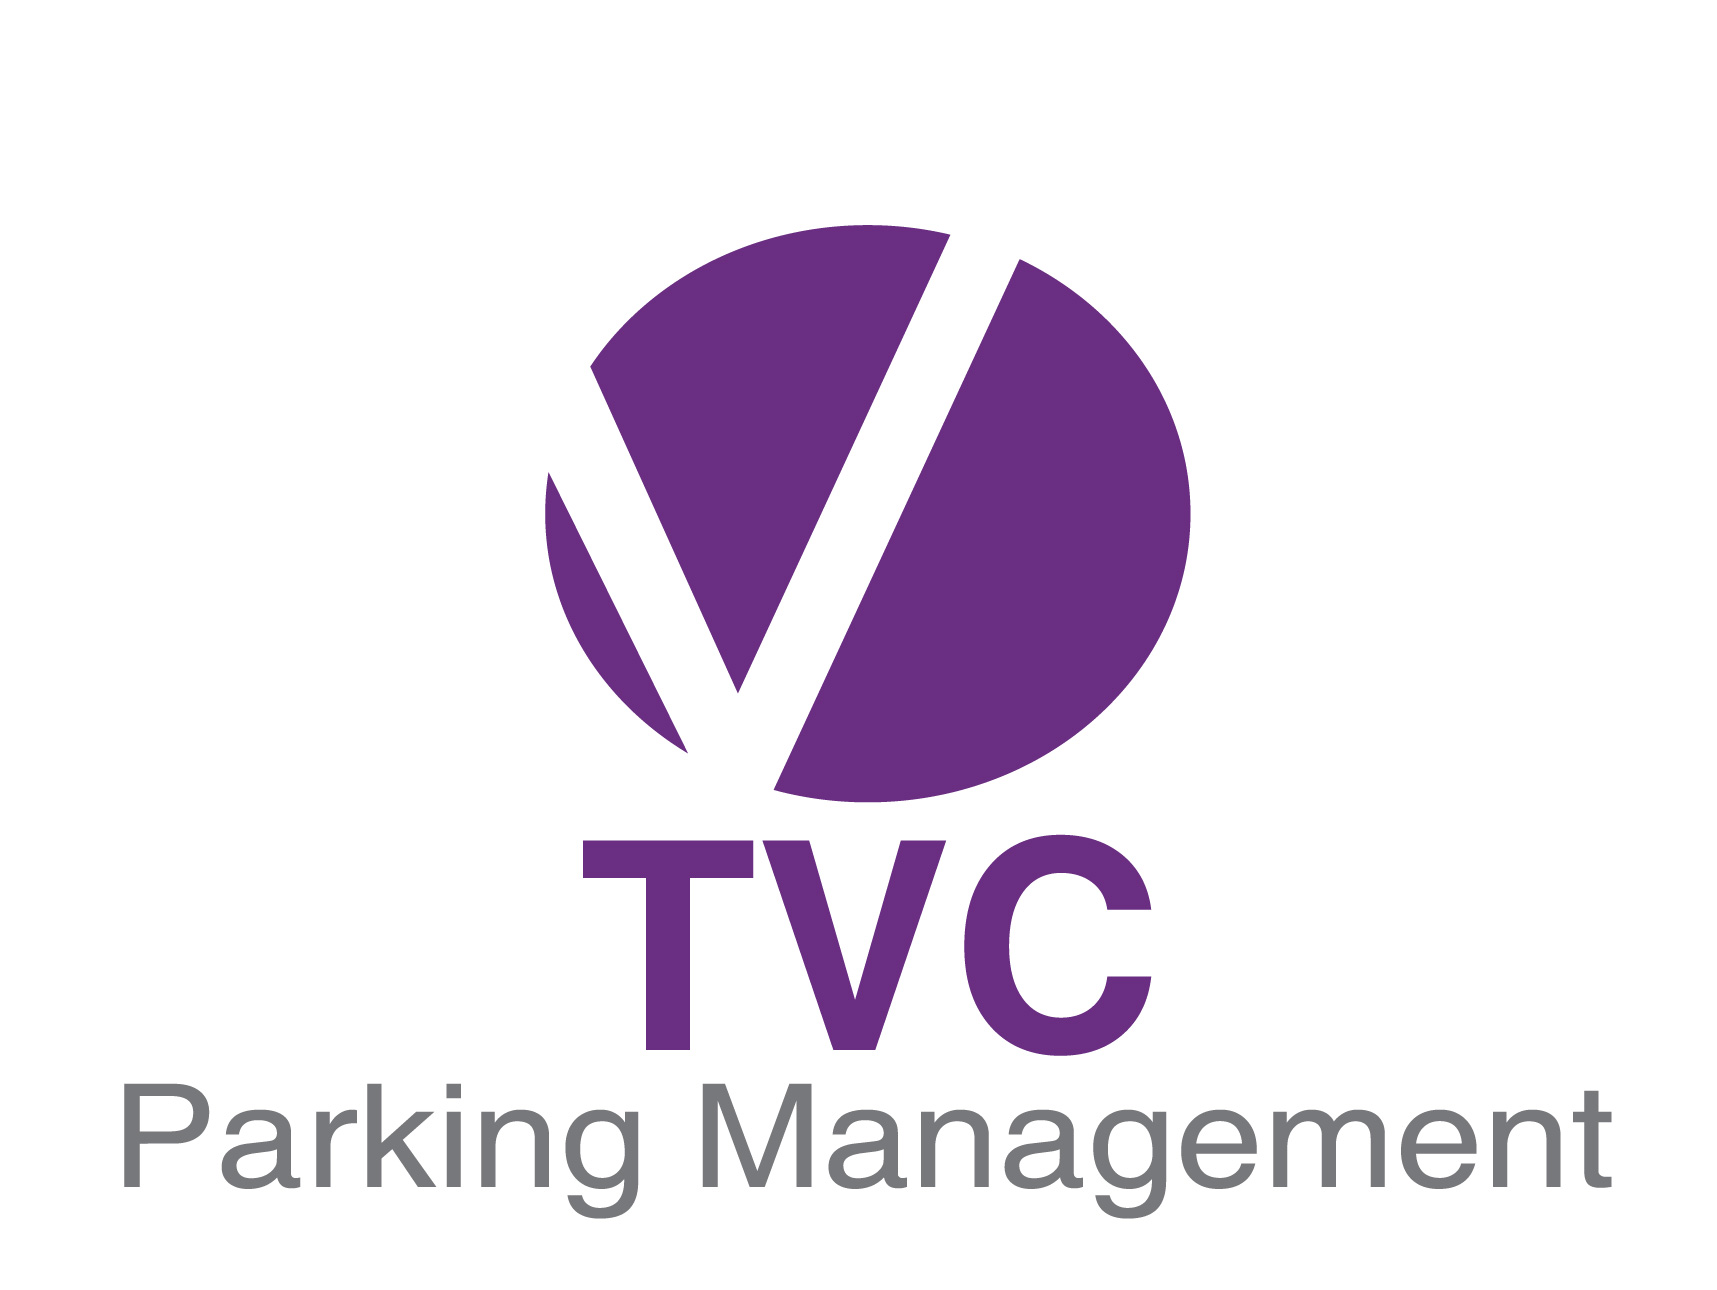 Hubb Tvc Parking Management About Company